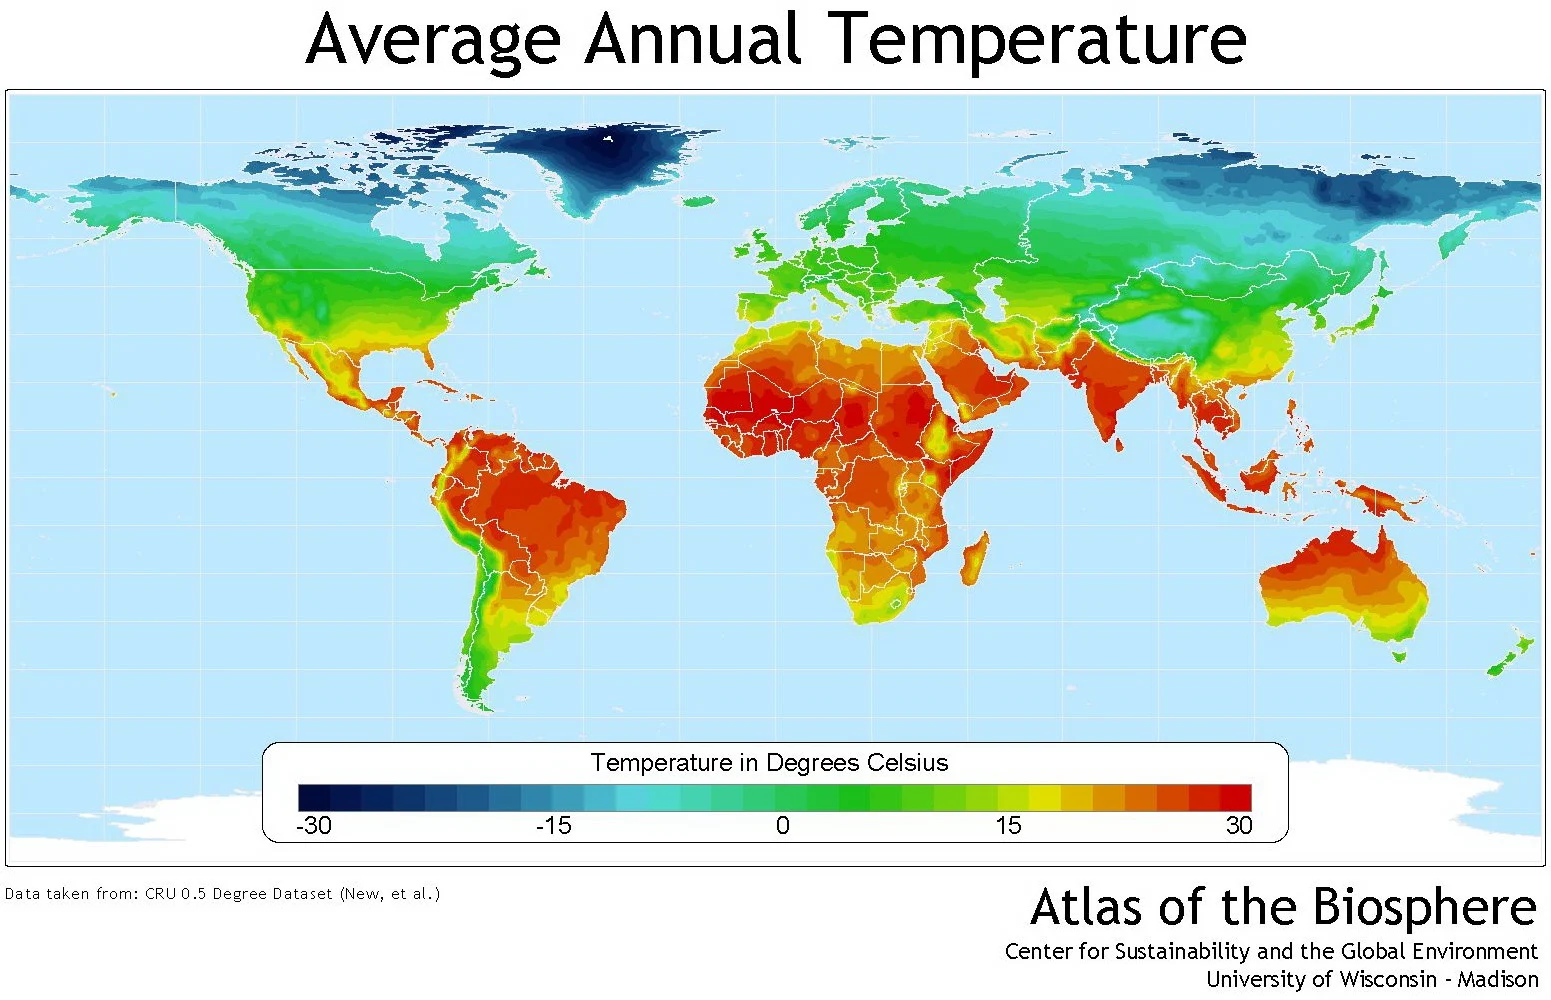 Global average annual temperature